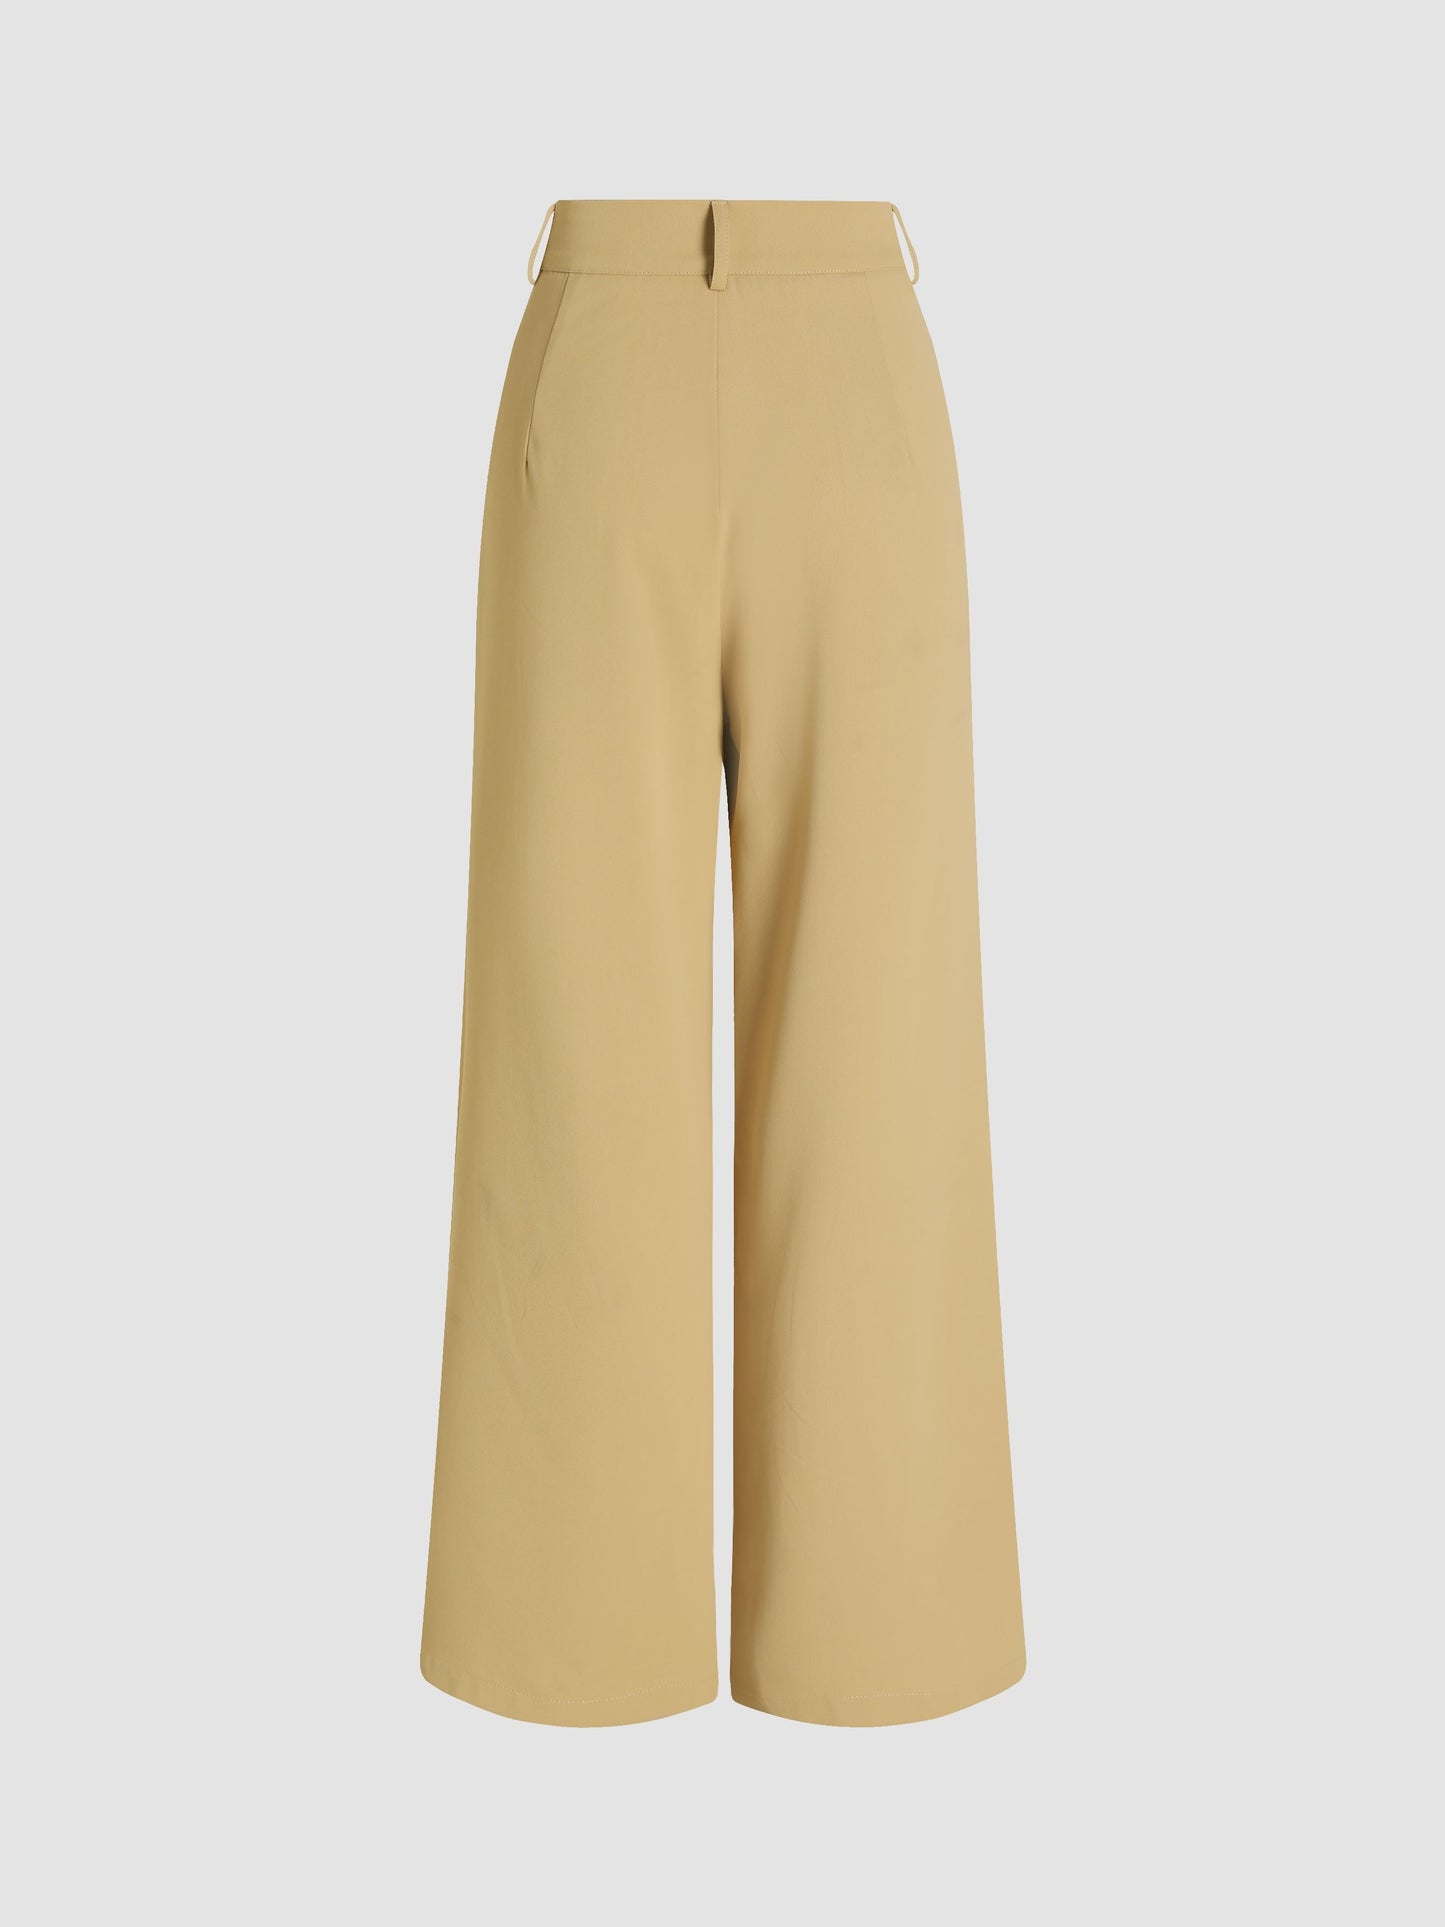 Antmvs Solid Wide Leg Pants, Elegant Button Slant Pocket Draped Pants, Women's Clothing